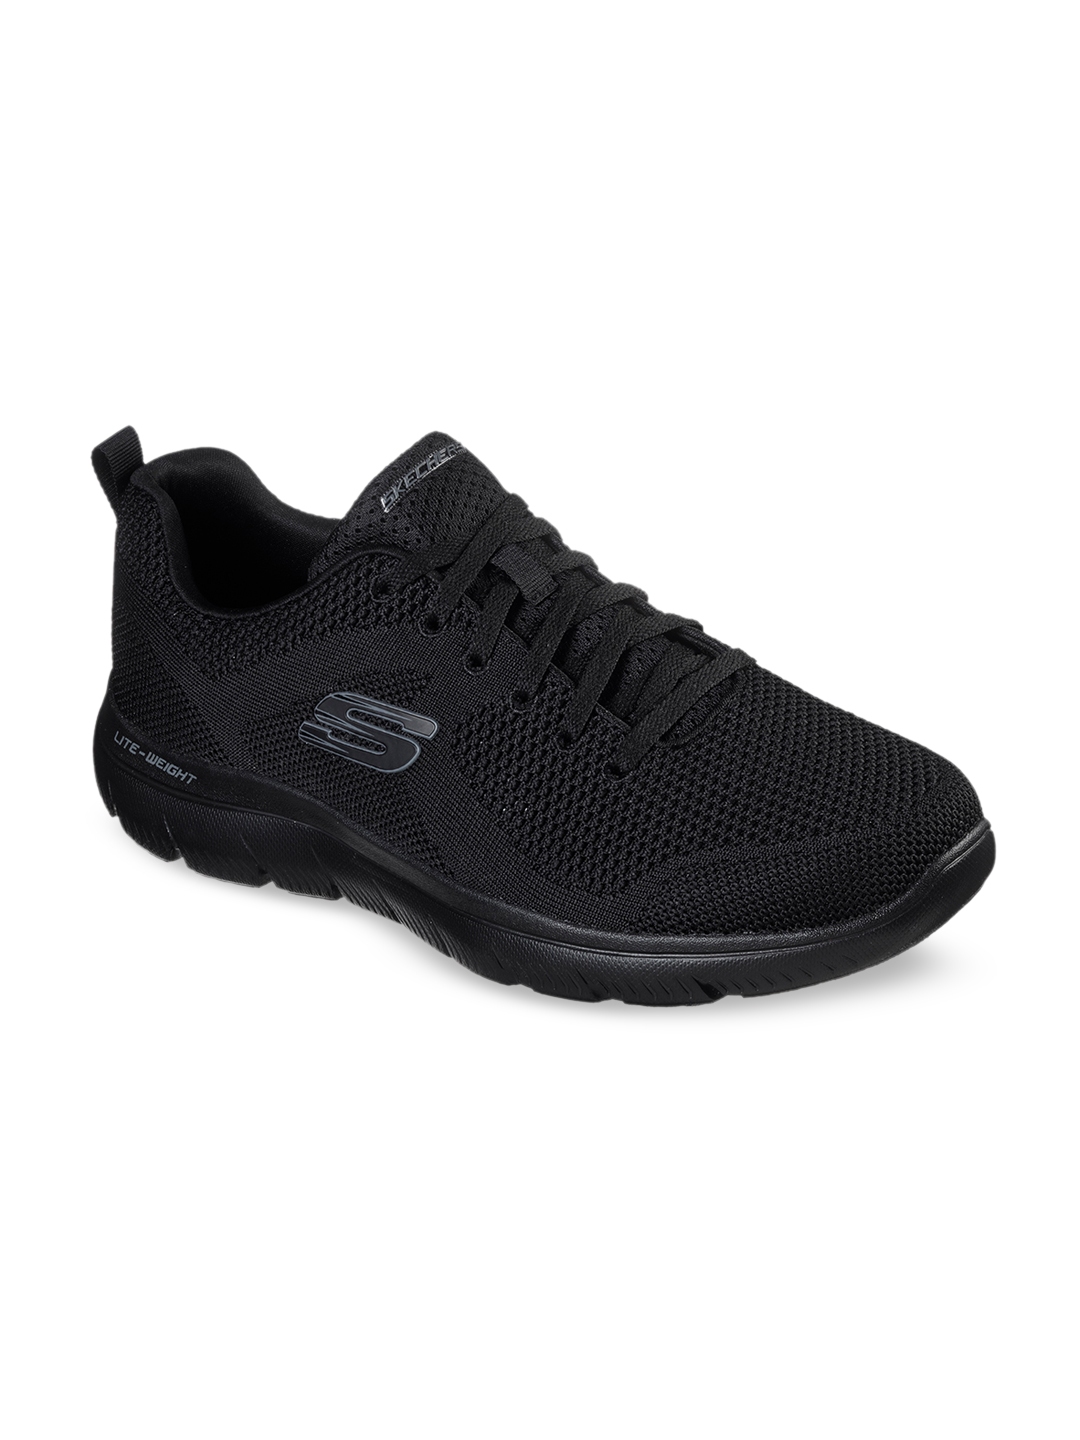 Buy Skechers Men Black Woven Design Sneakers - Casual Shoes for Men ...